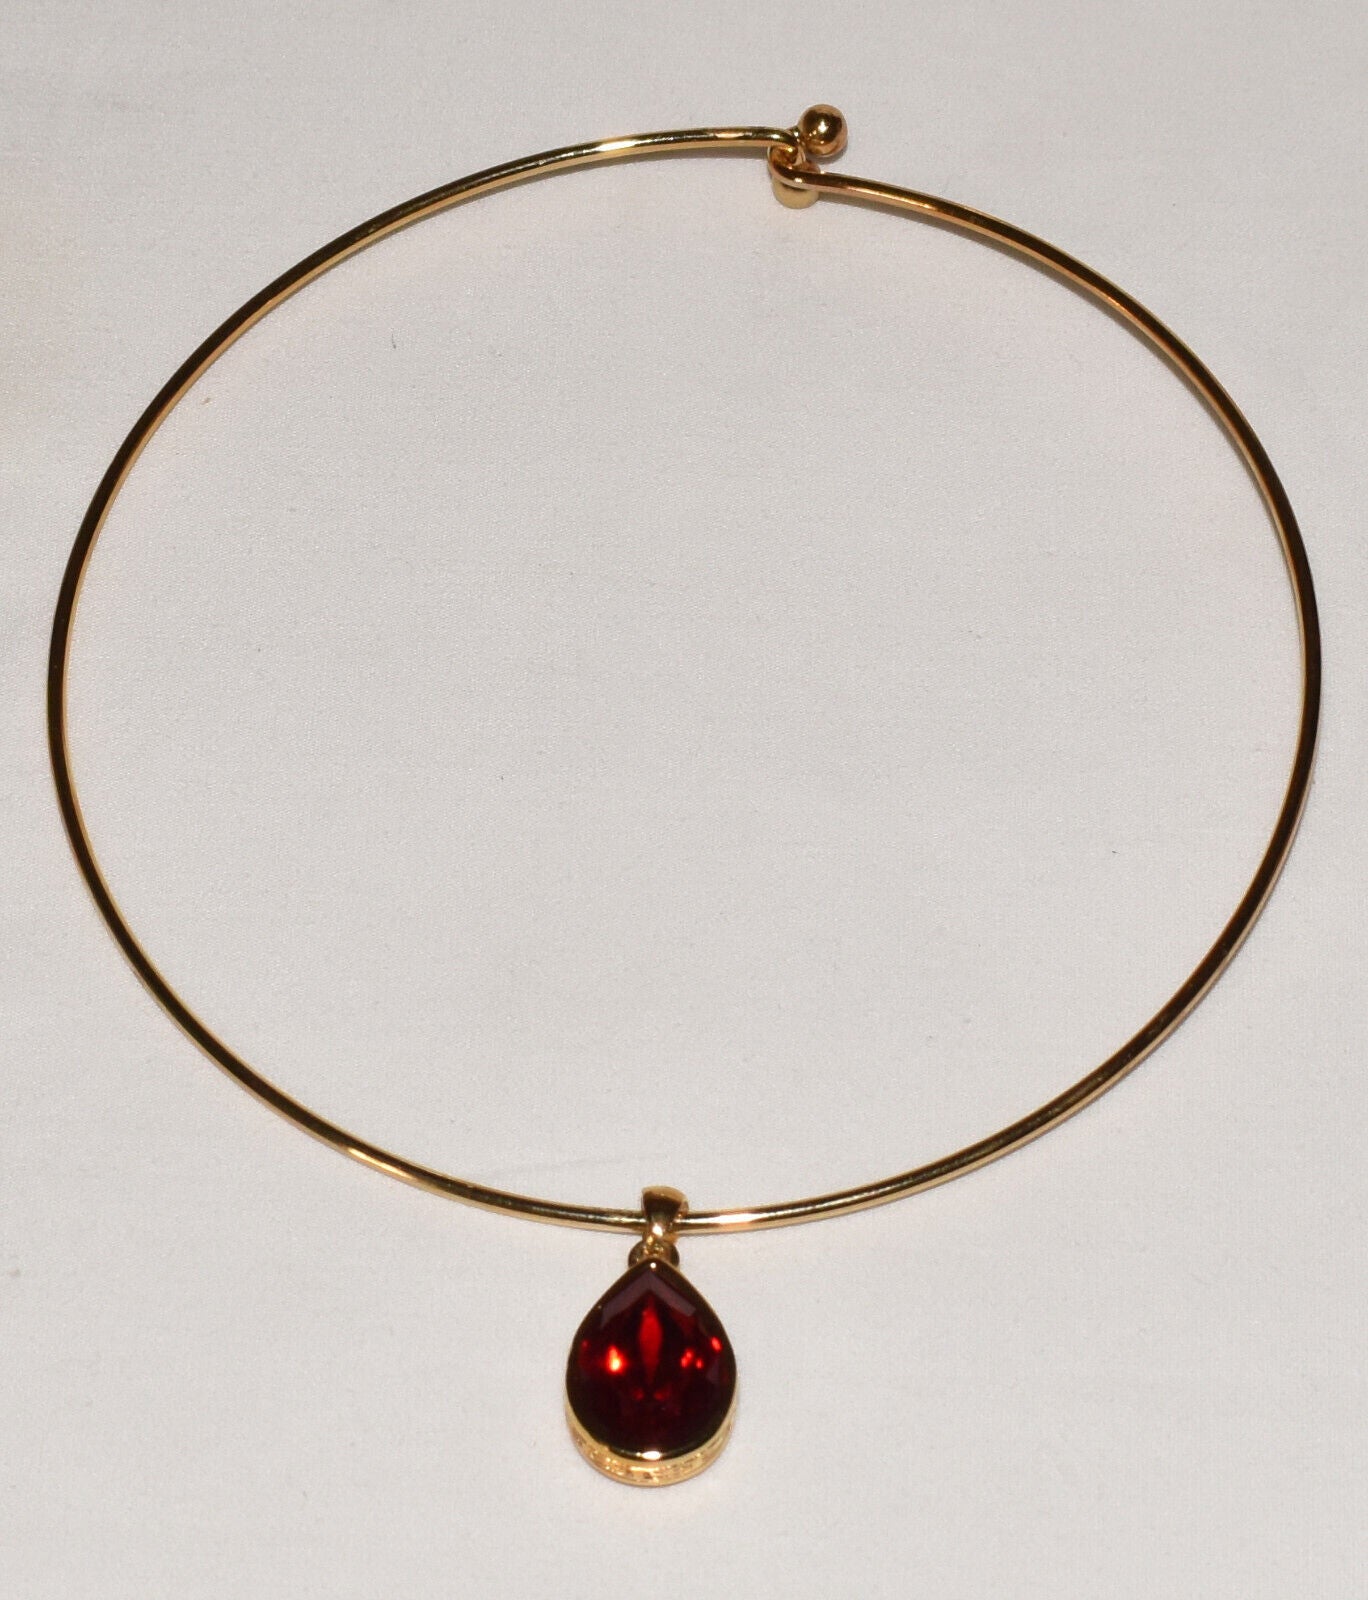 Vintage Givenchy Bijoux Paris Gold Collar Necklace w Red Teardrop Stone / Pendant